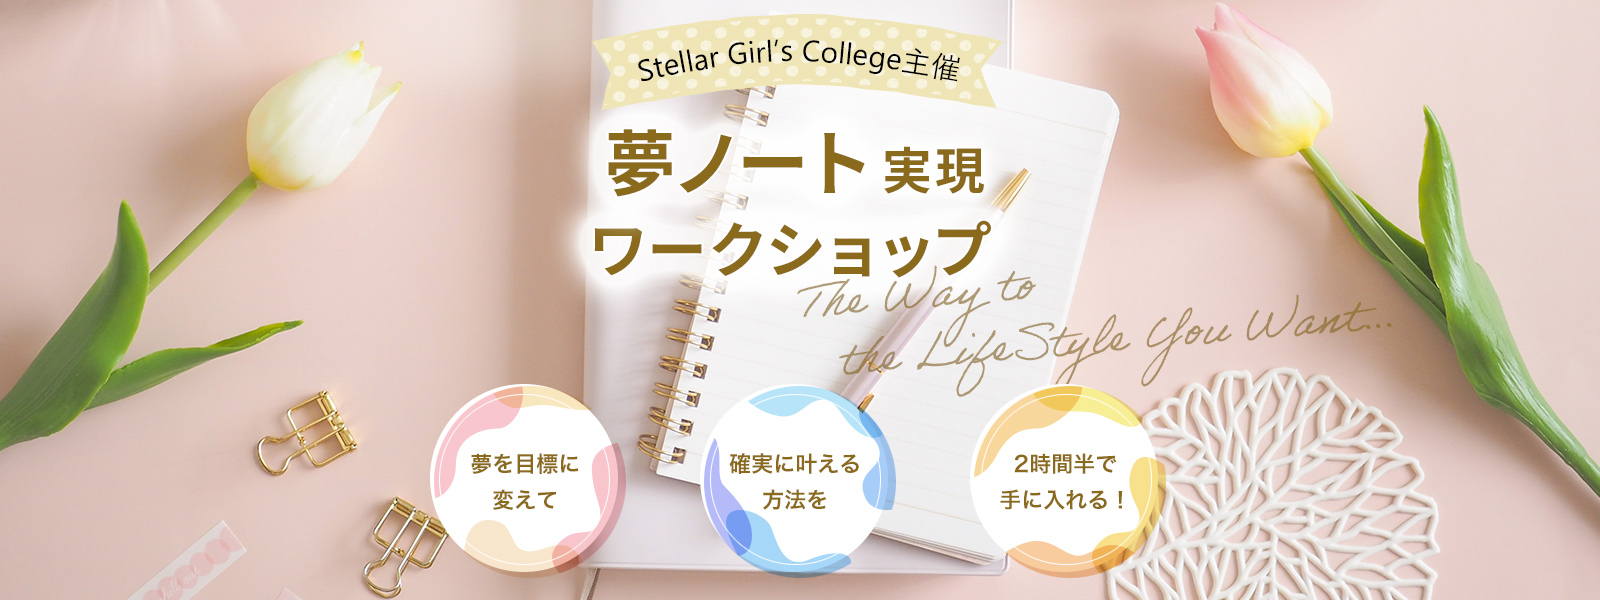 Stellar Girl’s College主催 夢ノート実現ワークショップ 夢を目標に変えて 確実に叶える方法を 2時間半で手に入れる！